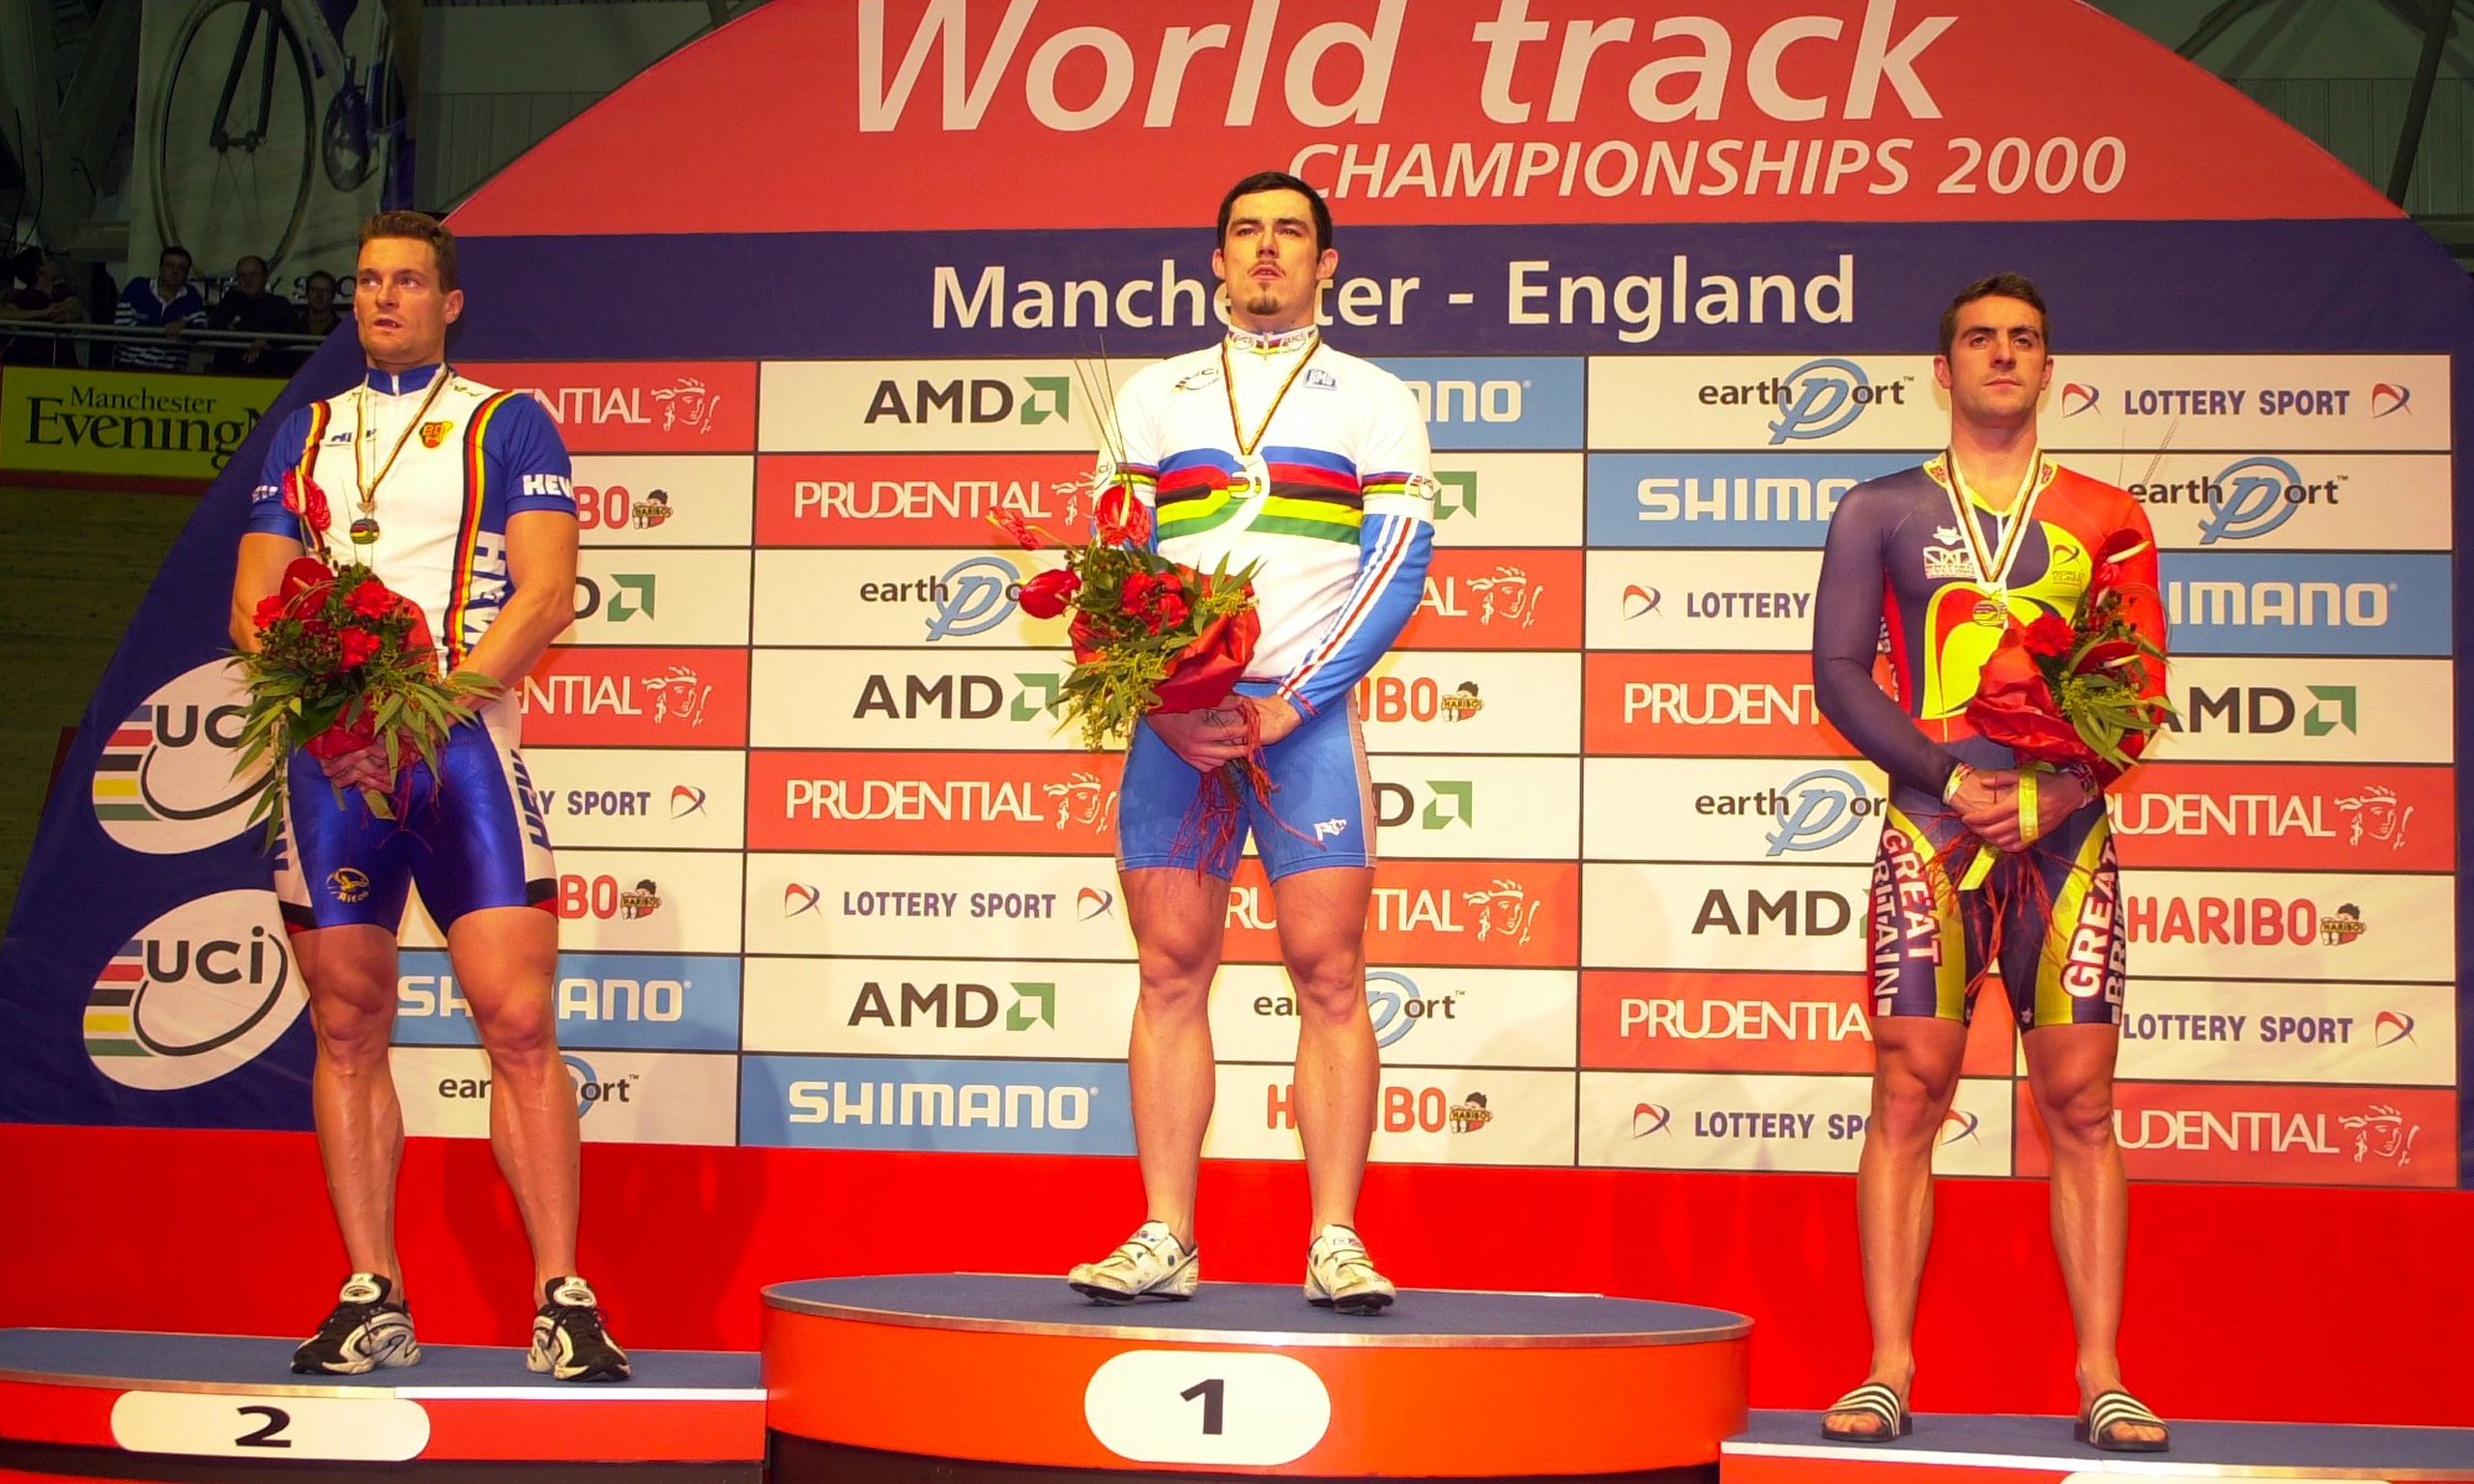 World Track Championships 2000 podium, Manchester